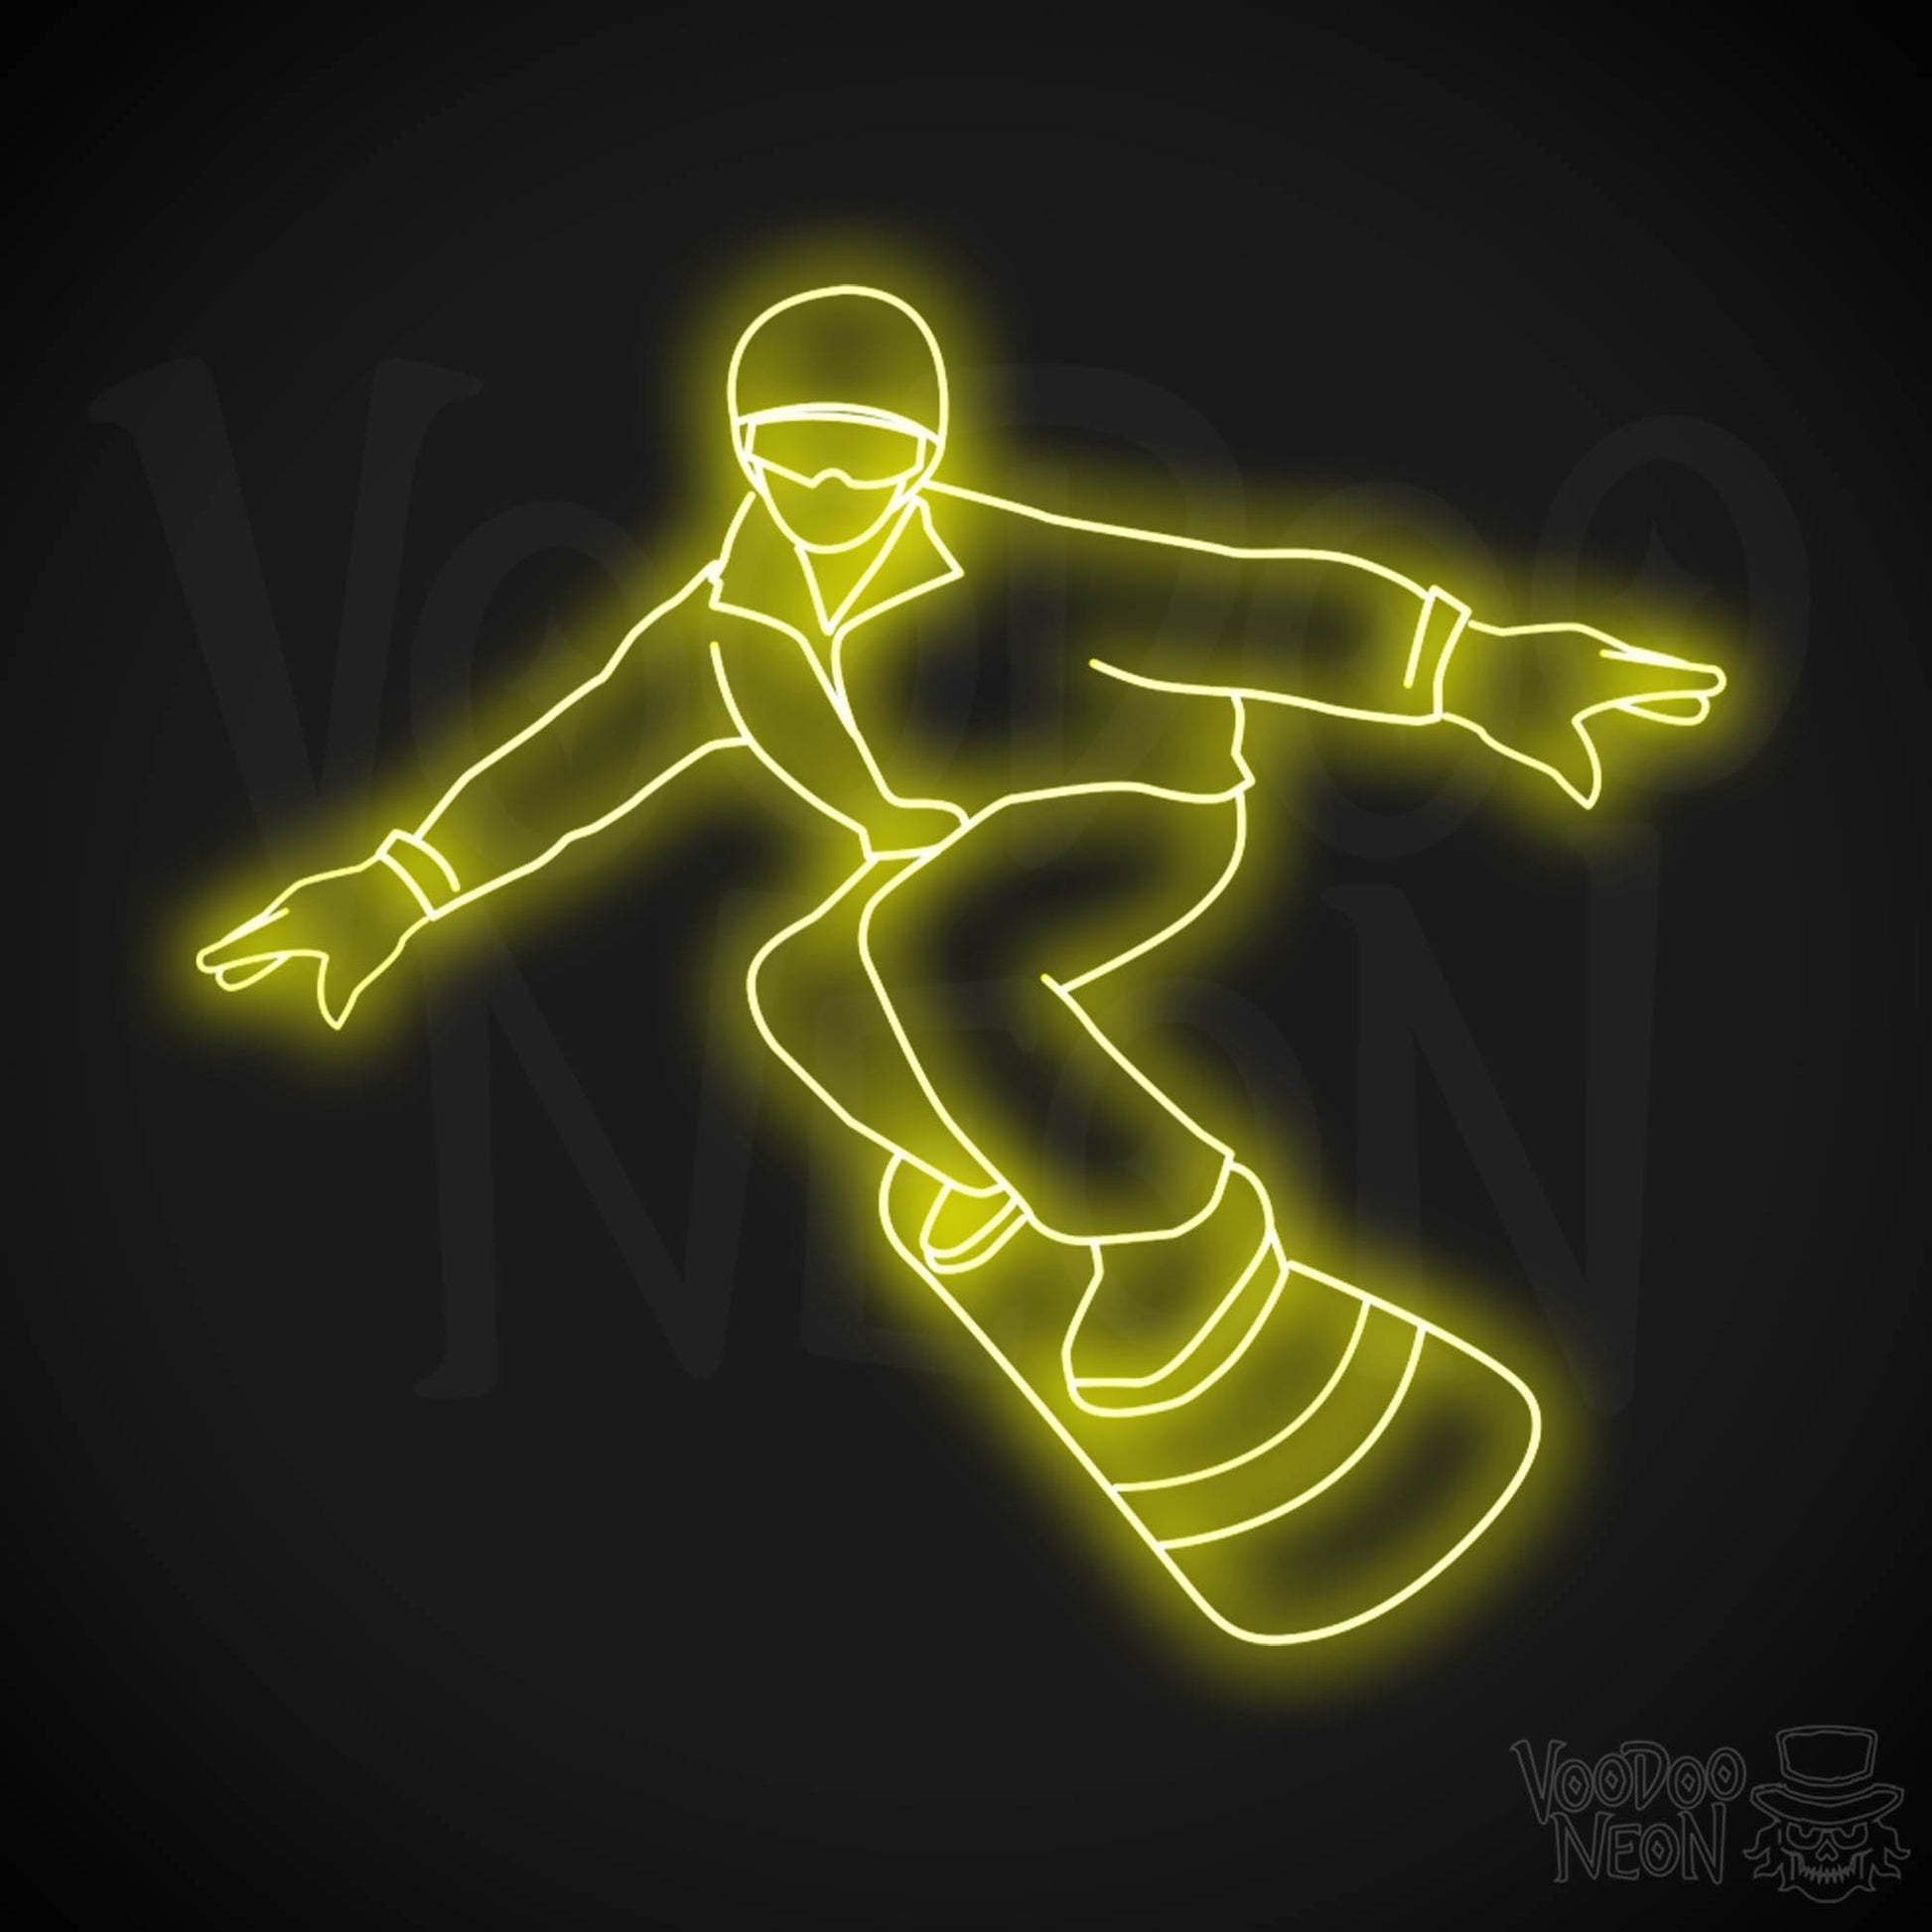 Snowboarding LED Neon - Yellow